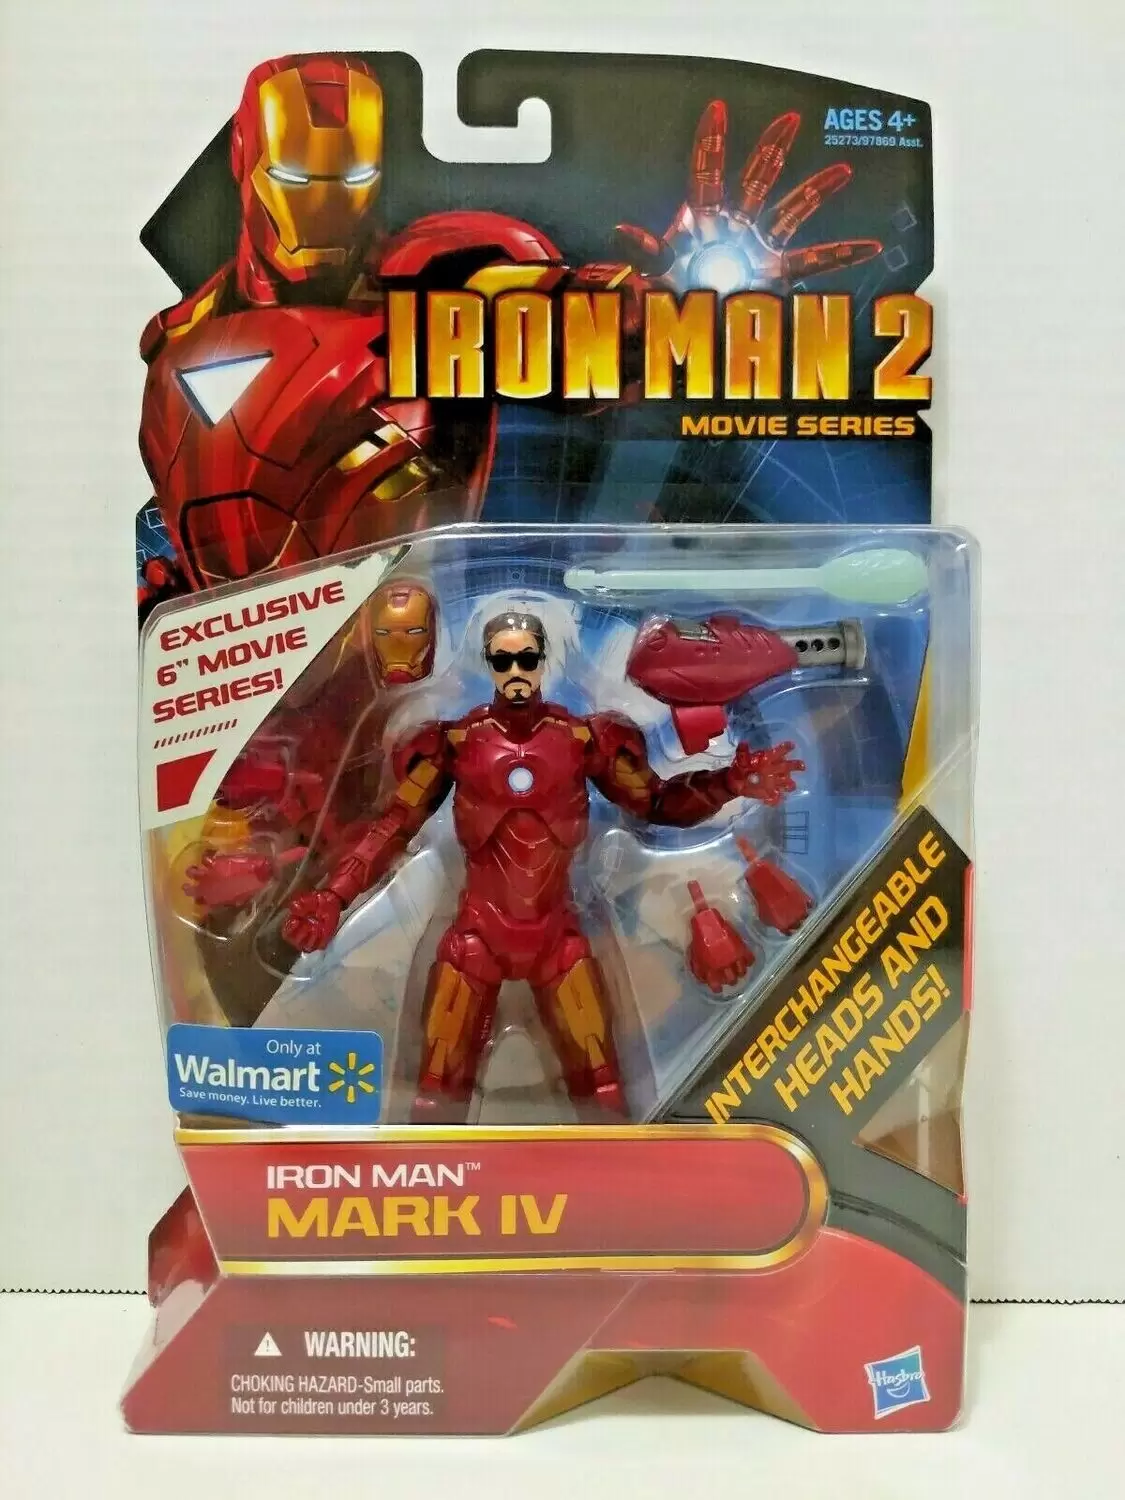 Iron Man 2 - Movie & Comic Series - Iron Man Mark IV Interchangeable Heads and Hands